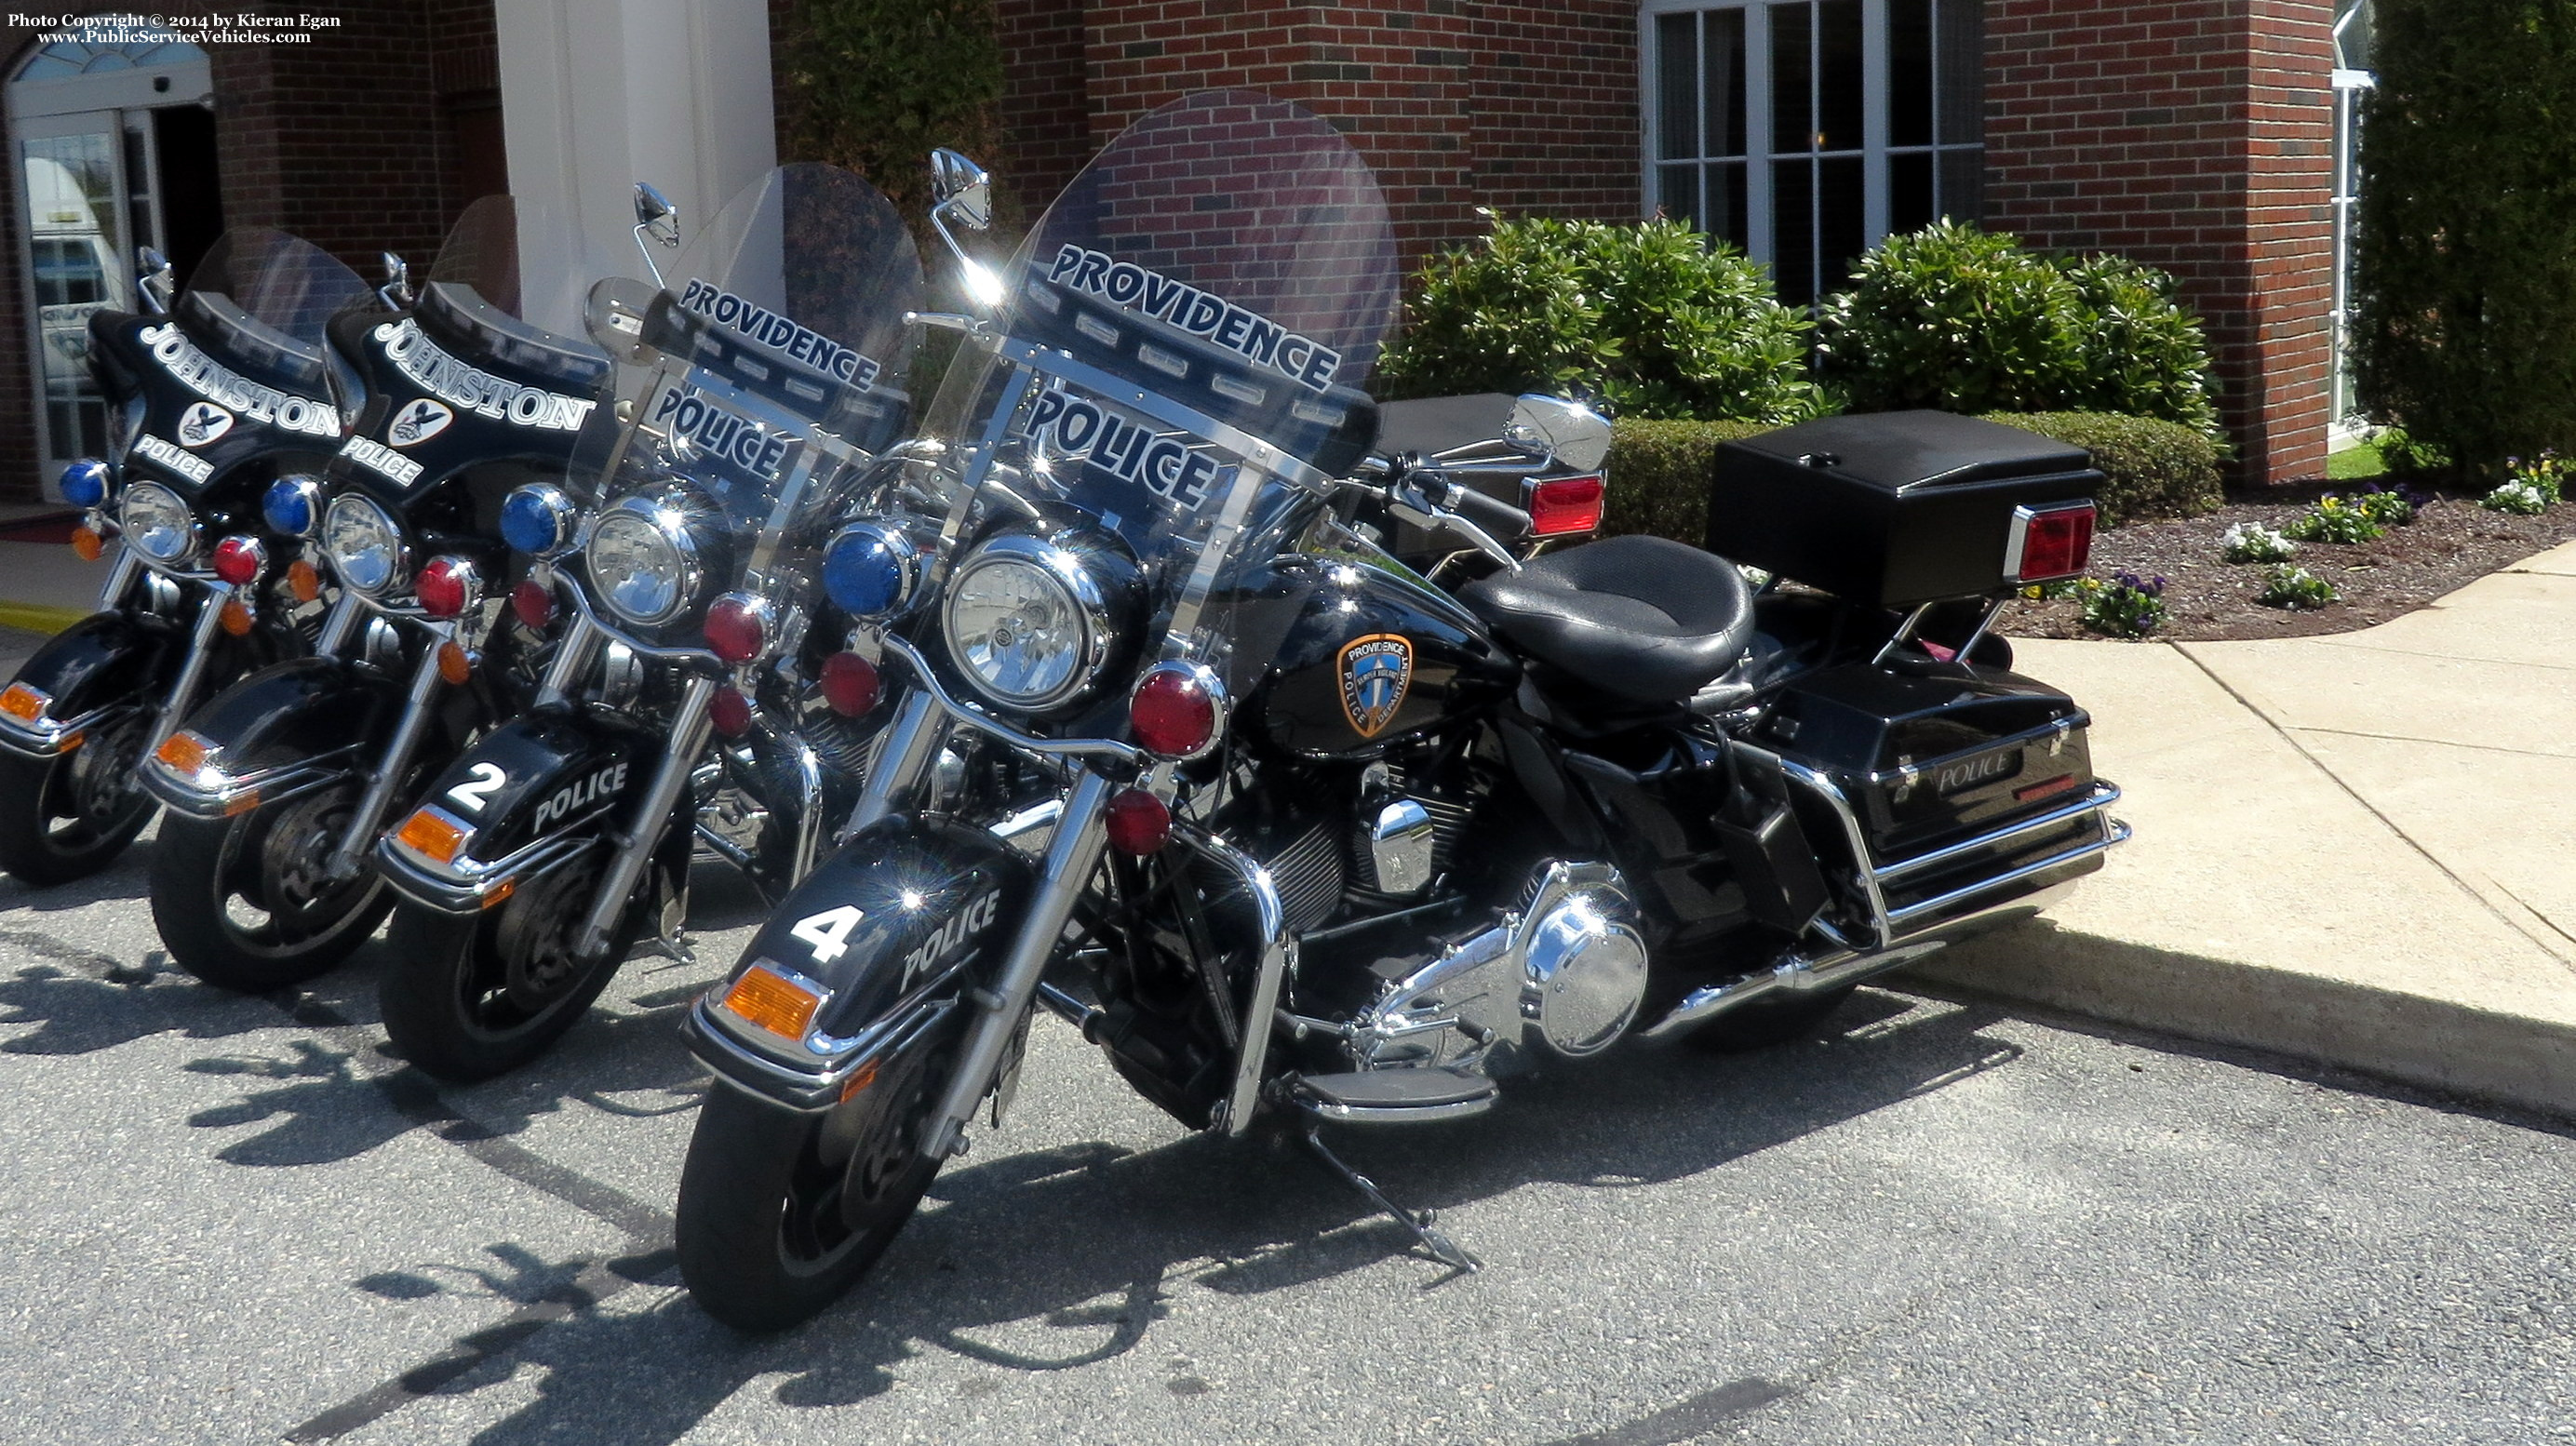 A photo  of Providence Police
            Motorcycle 4, a 2000-2014 Harley Davidson Electra Glide             taken by Kieran Egan